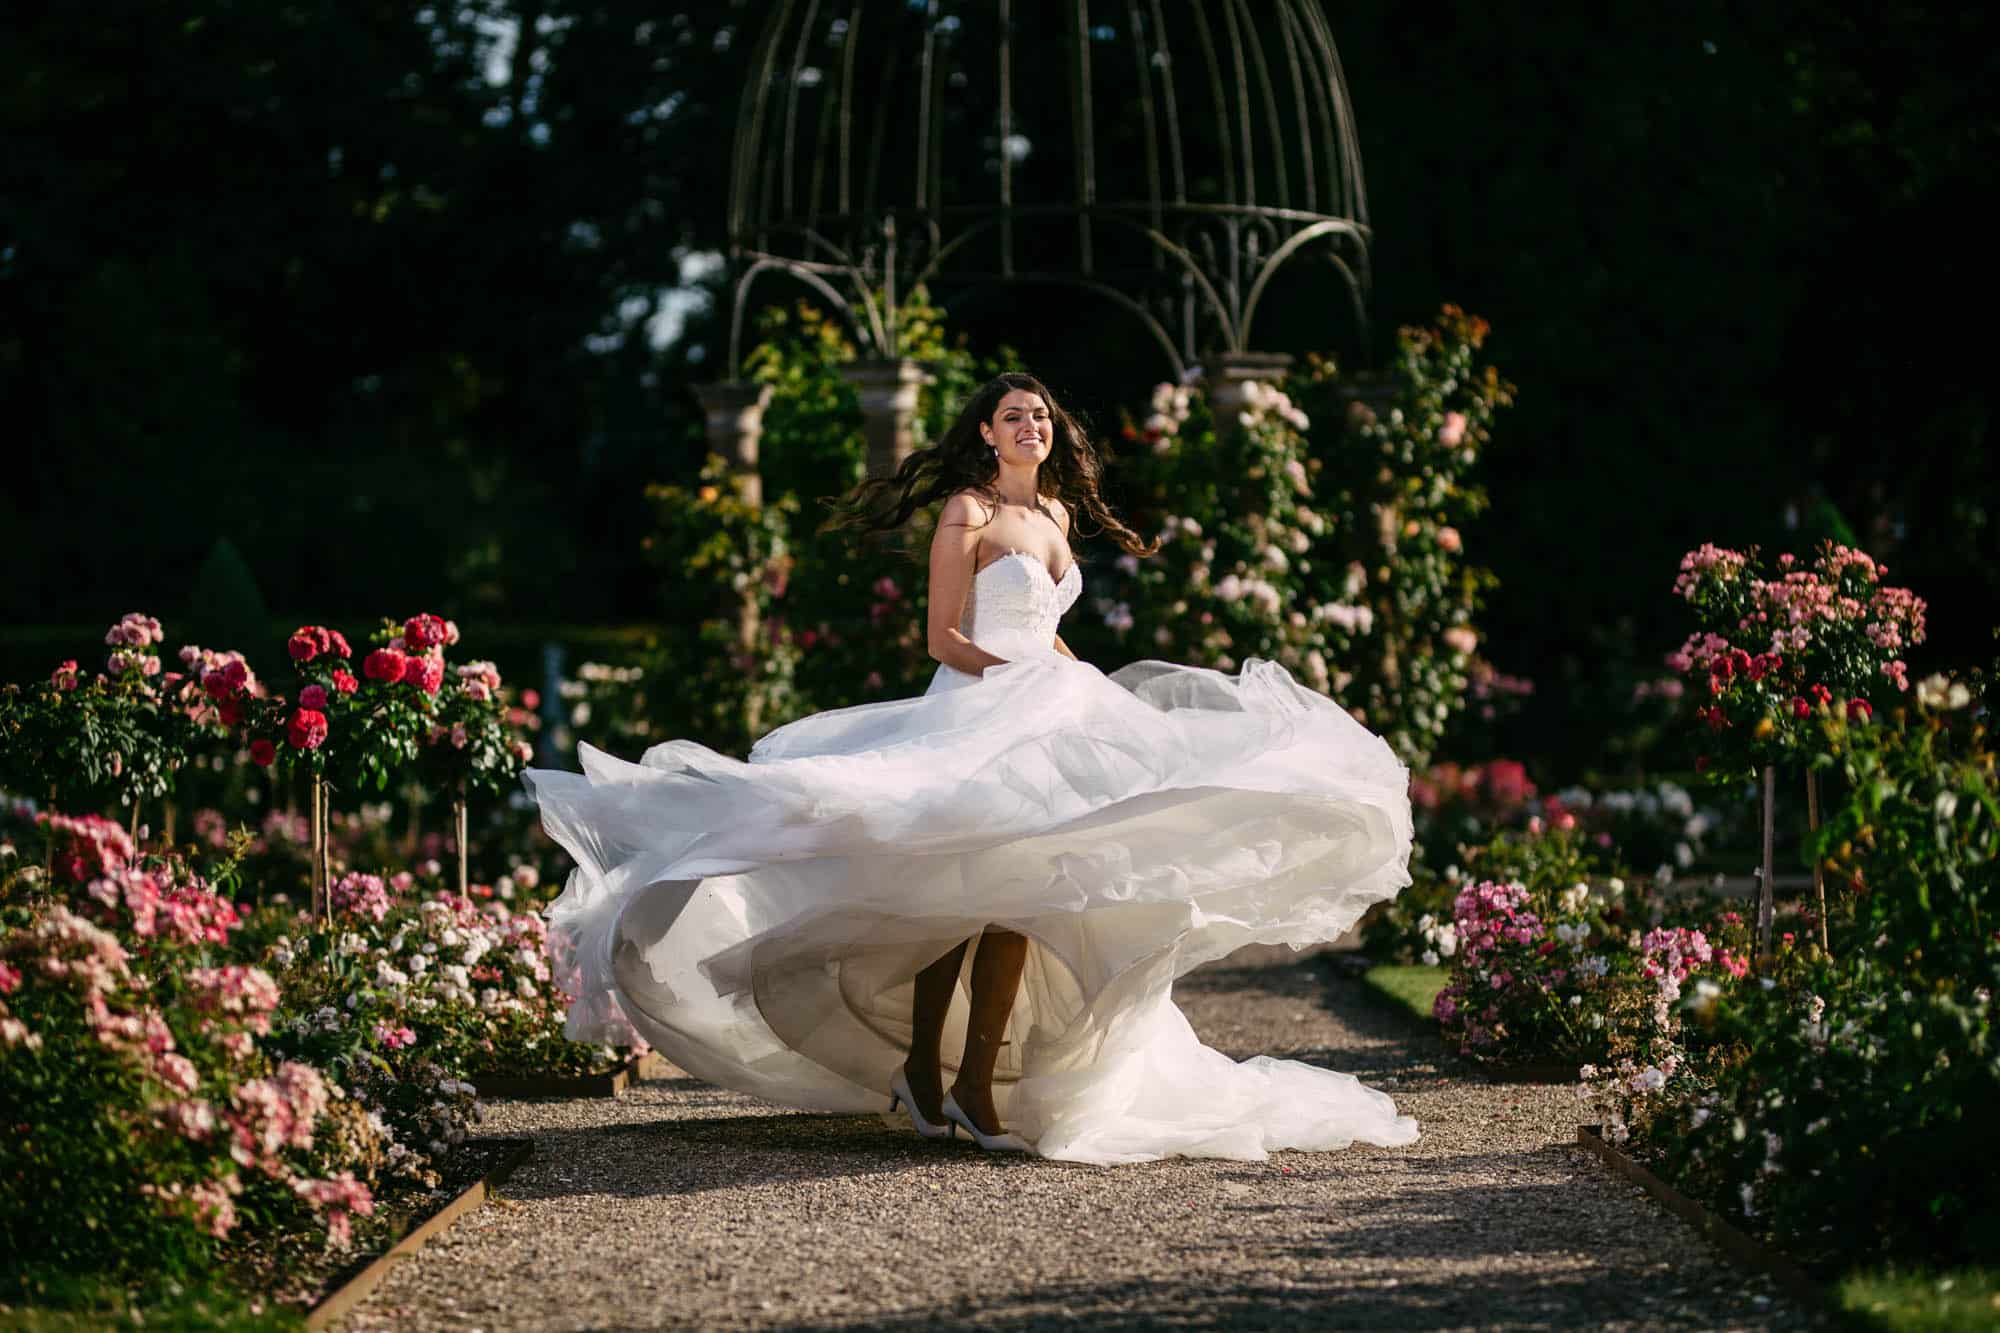 A bride in an A-line wedding dress in a garden.